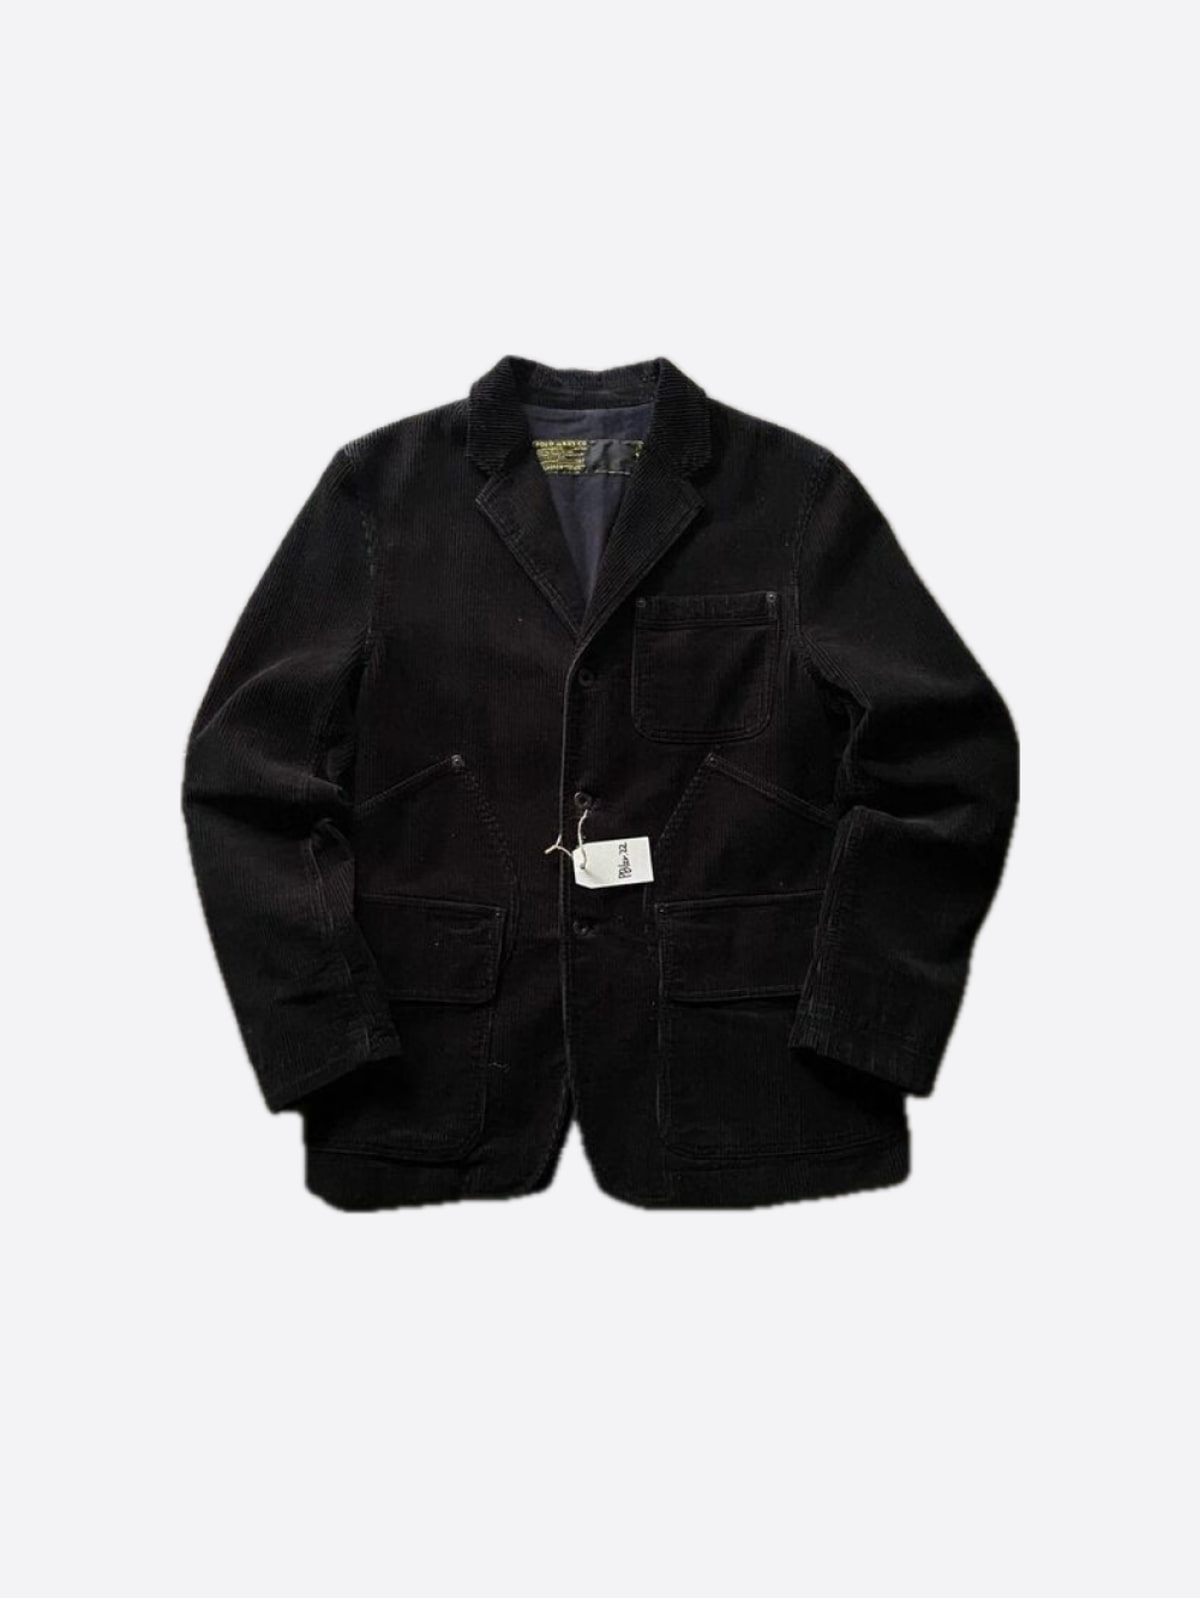 Polo Jeans Black Corduroy Hunting Jacket (95size)